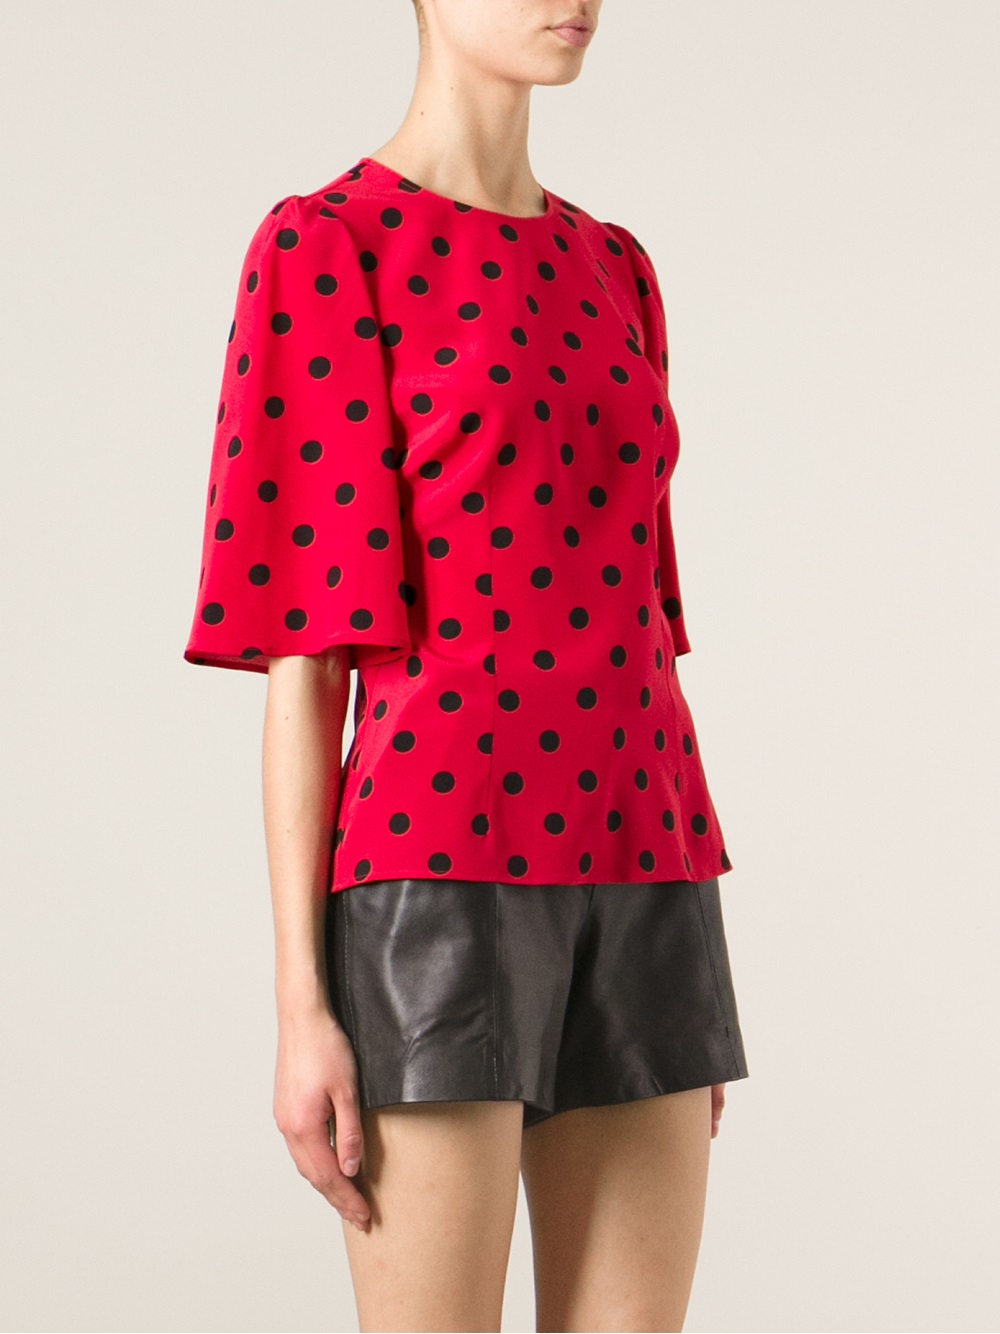 A Polka-dot blouse – Ladulsatina